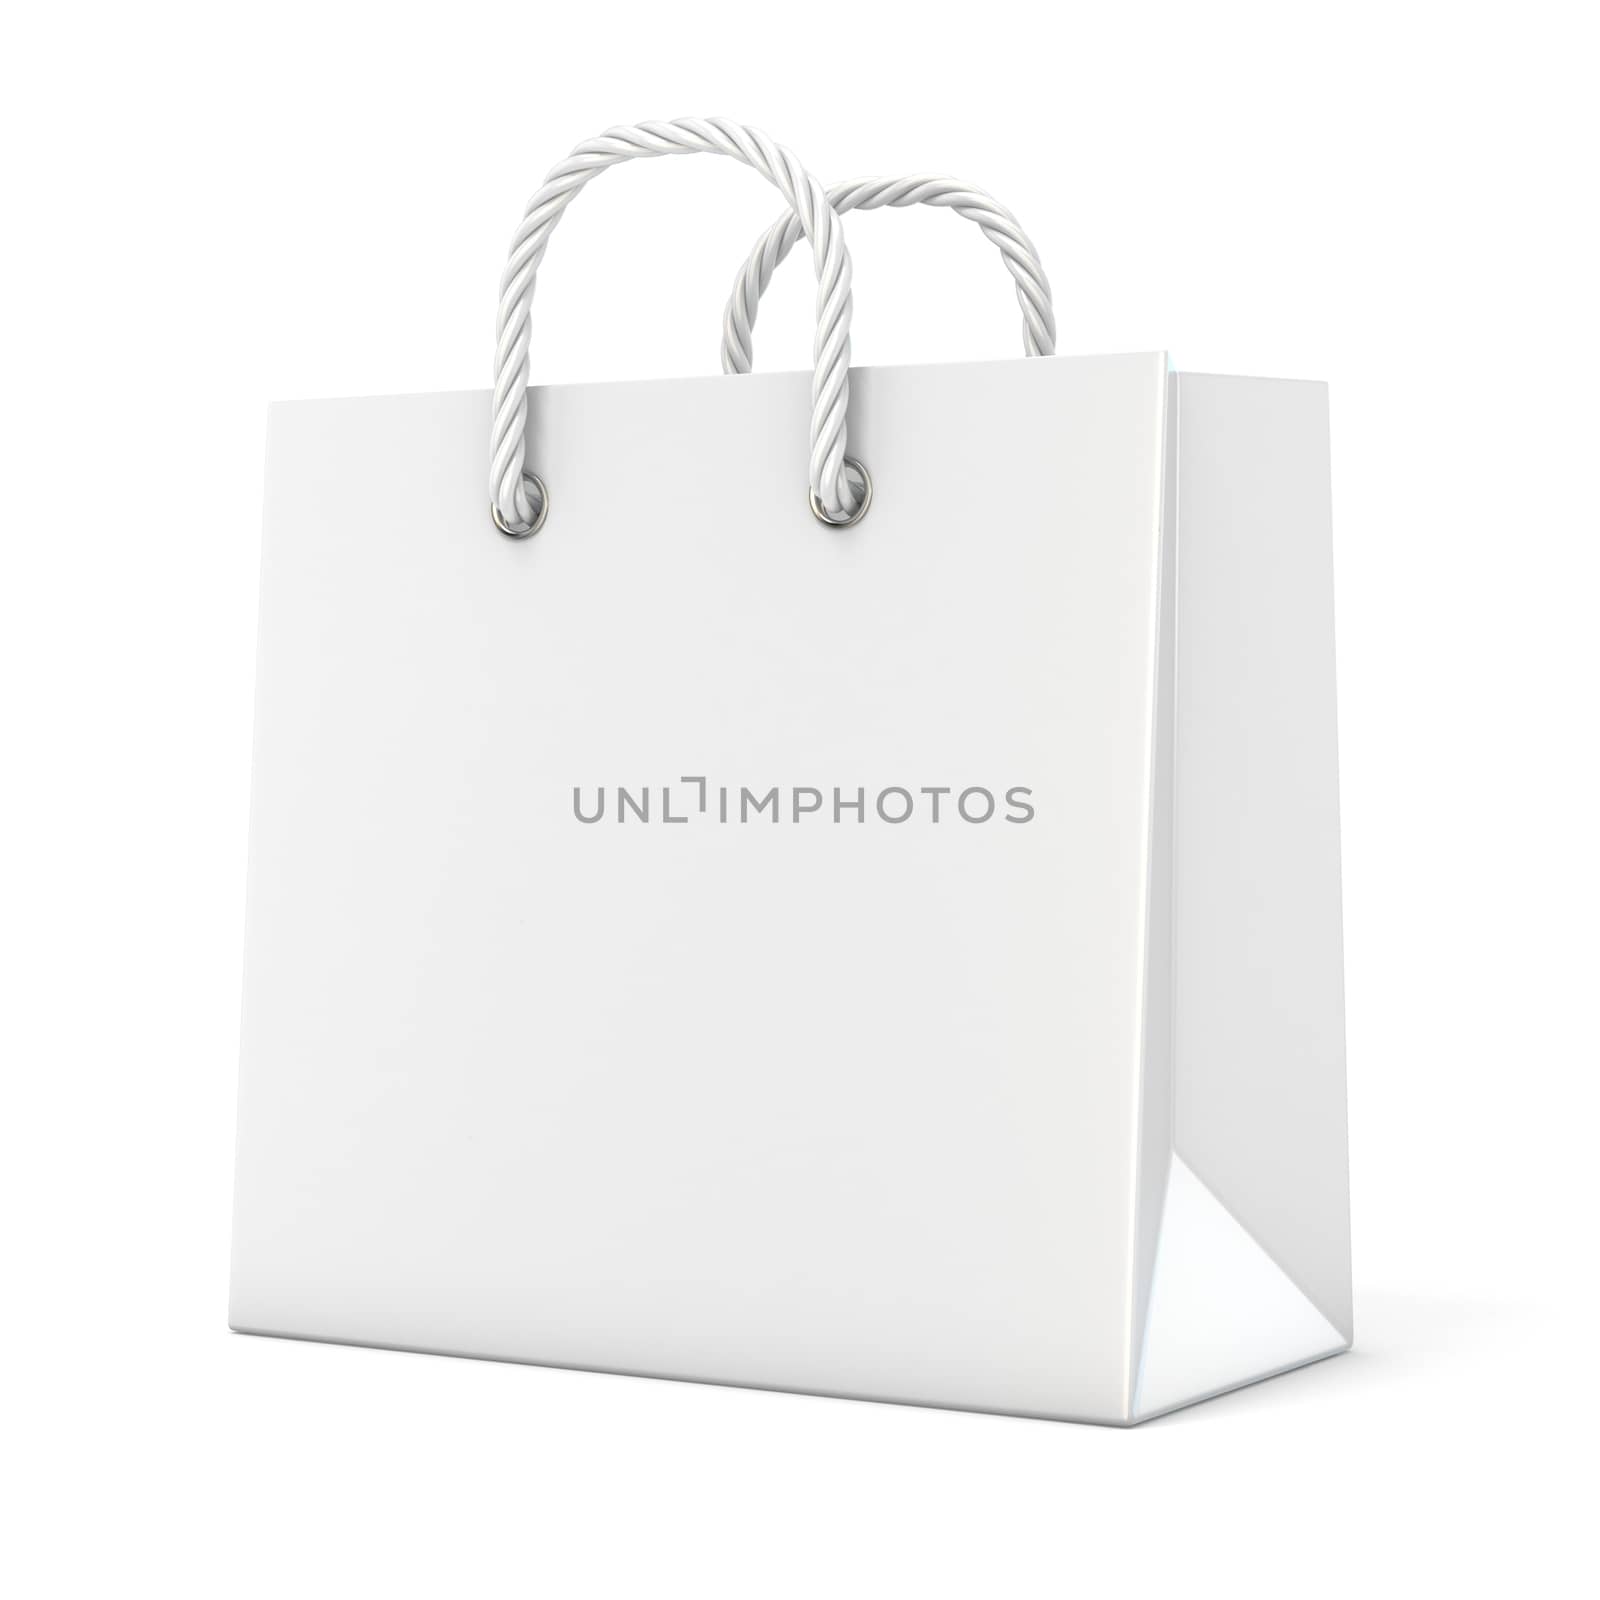 Single, empty, blank shopping bag. 3D render illustration isolated on white background